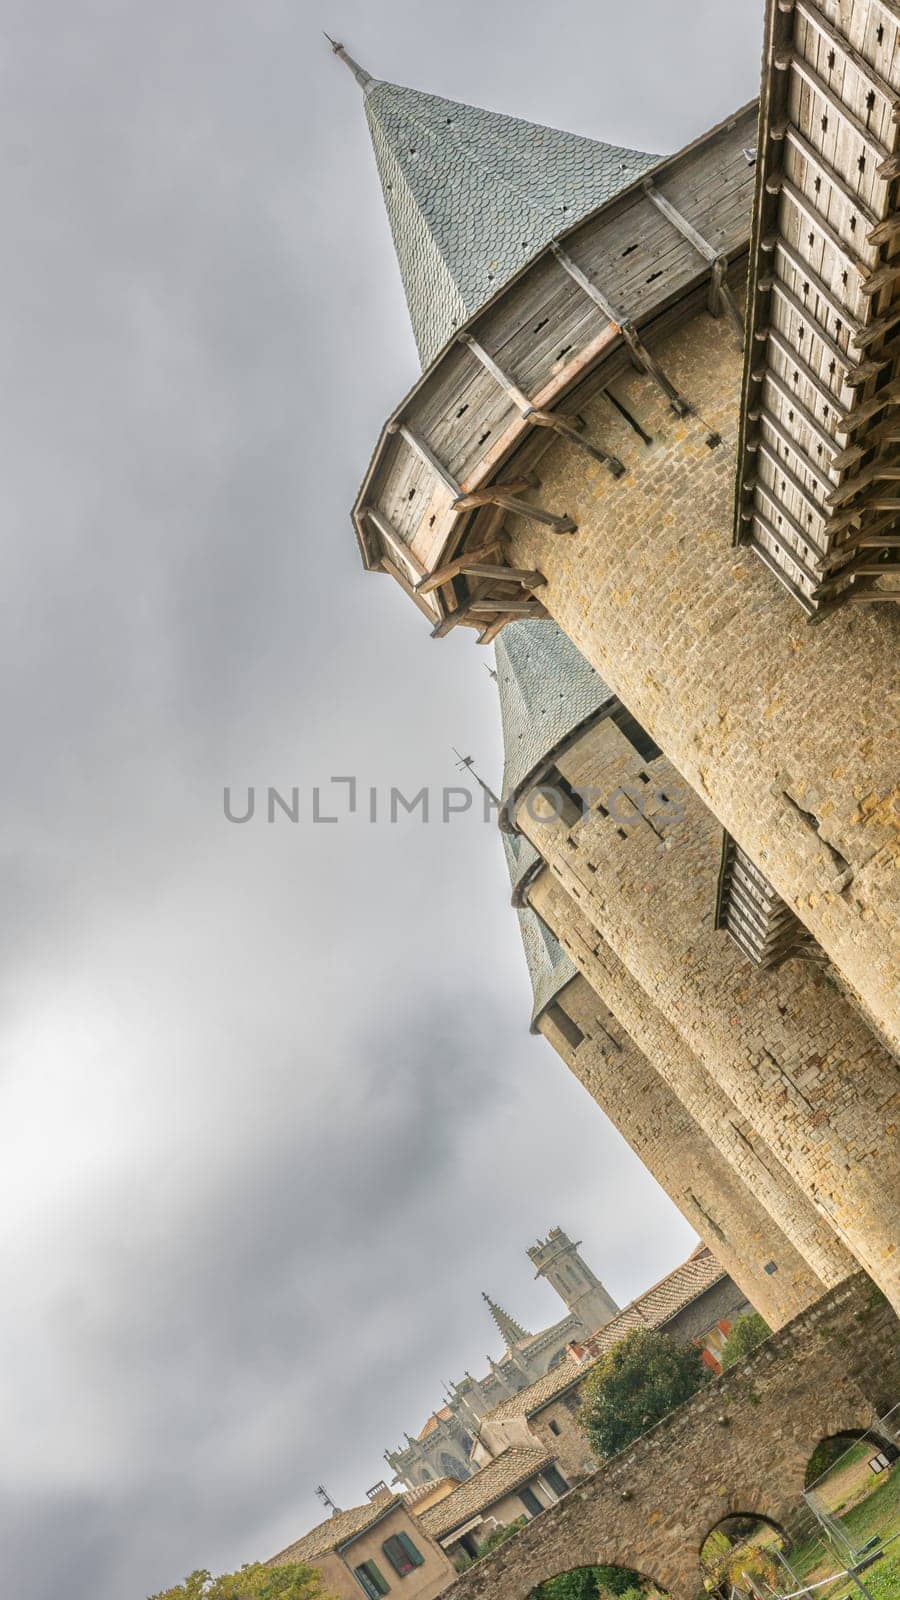 Castle of Carcassonne in France by vladispas